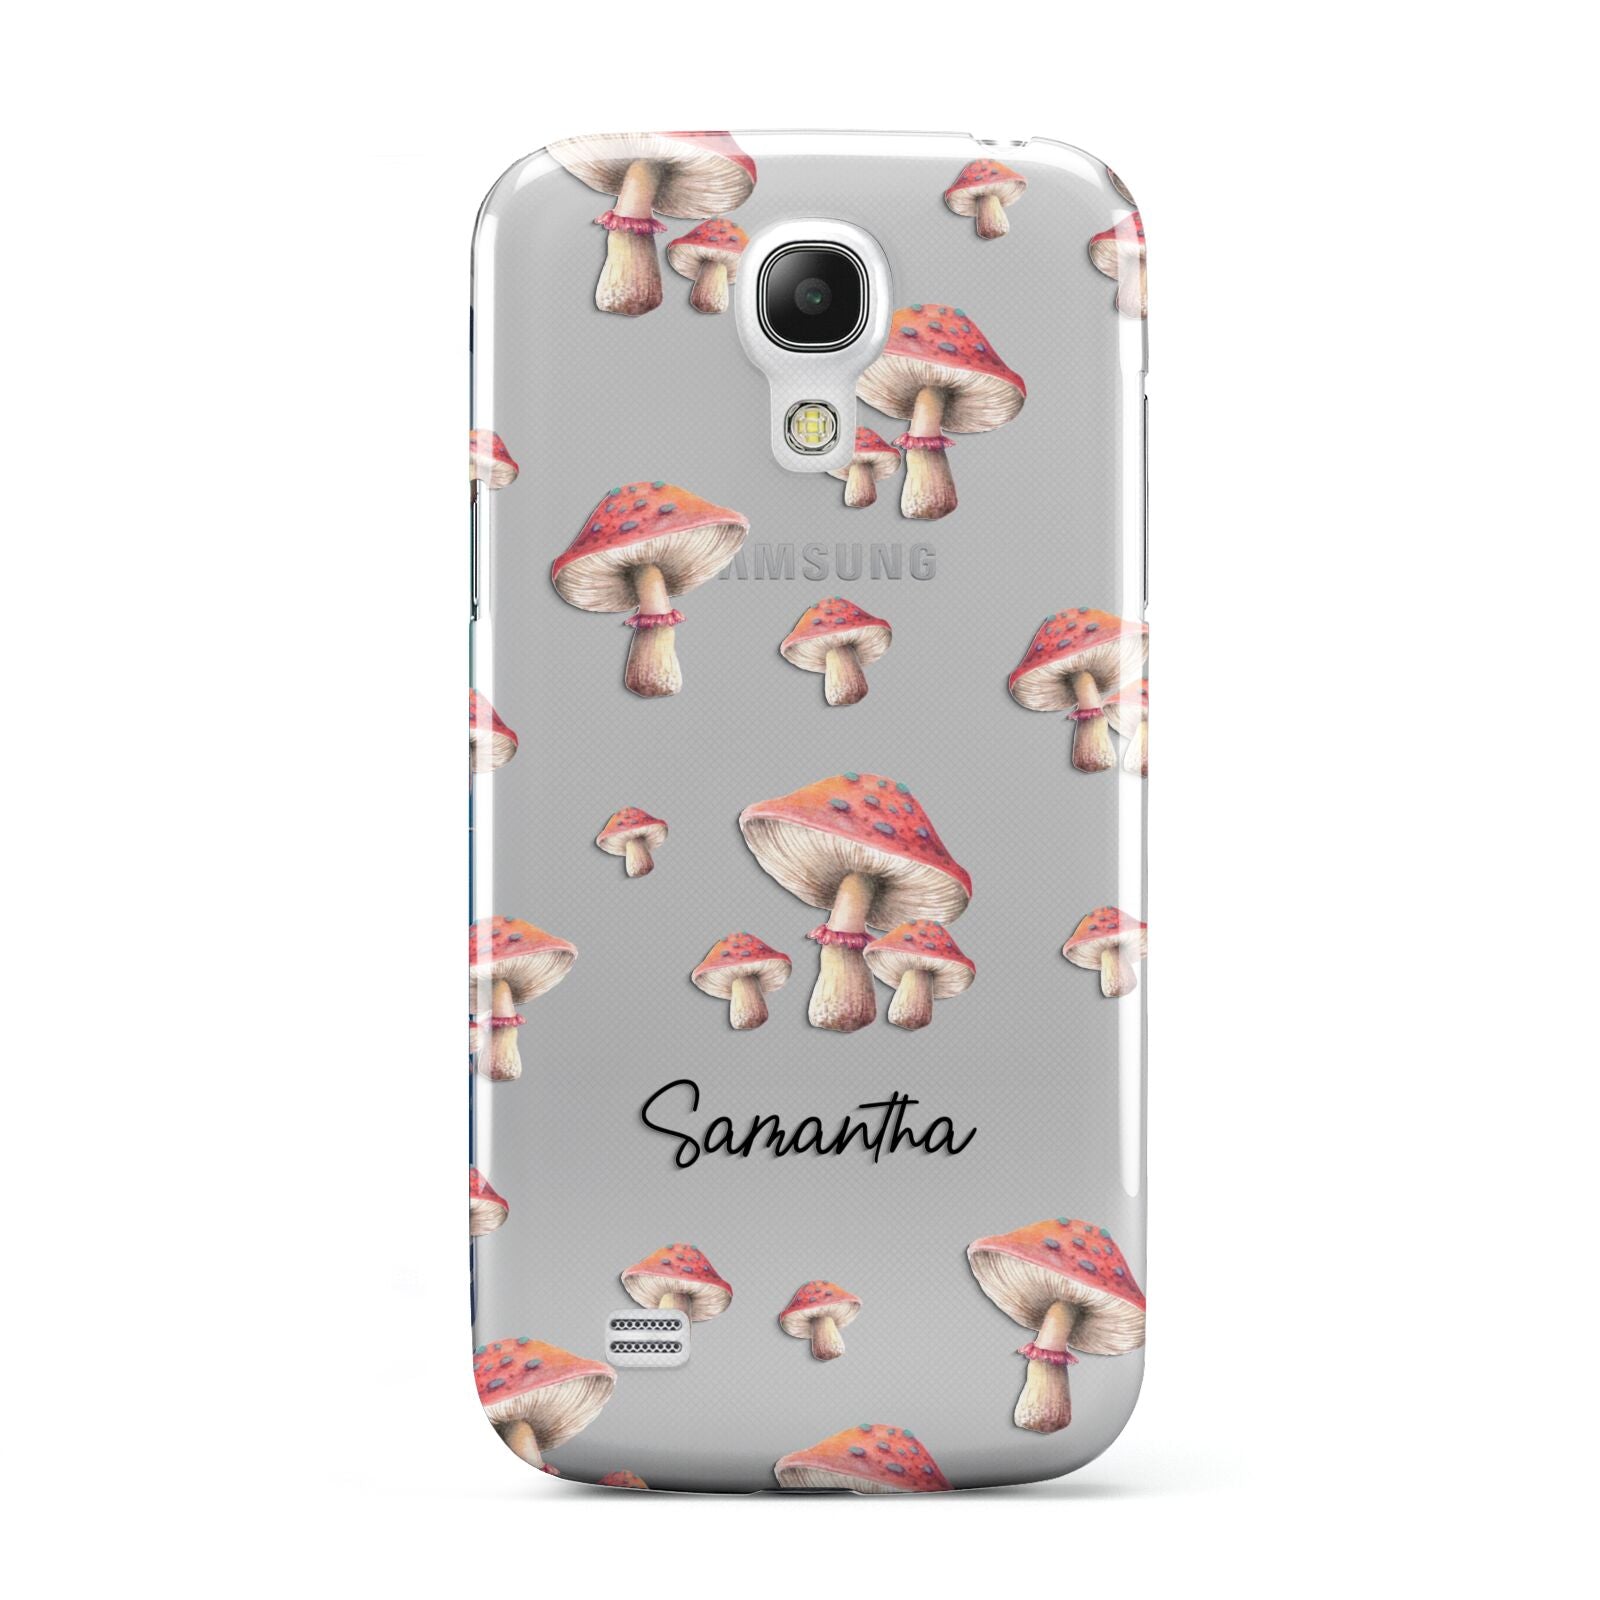 Mushroom Illustrations with Name Samsung Galaxy S4 Mini Case